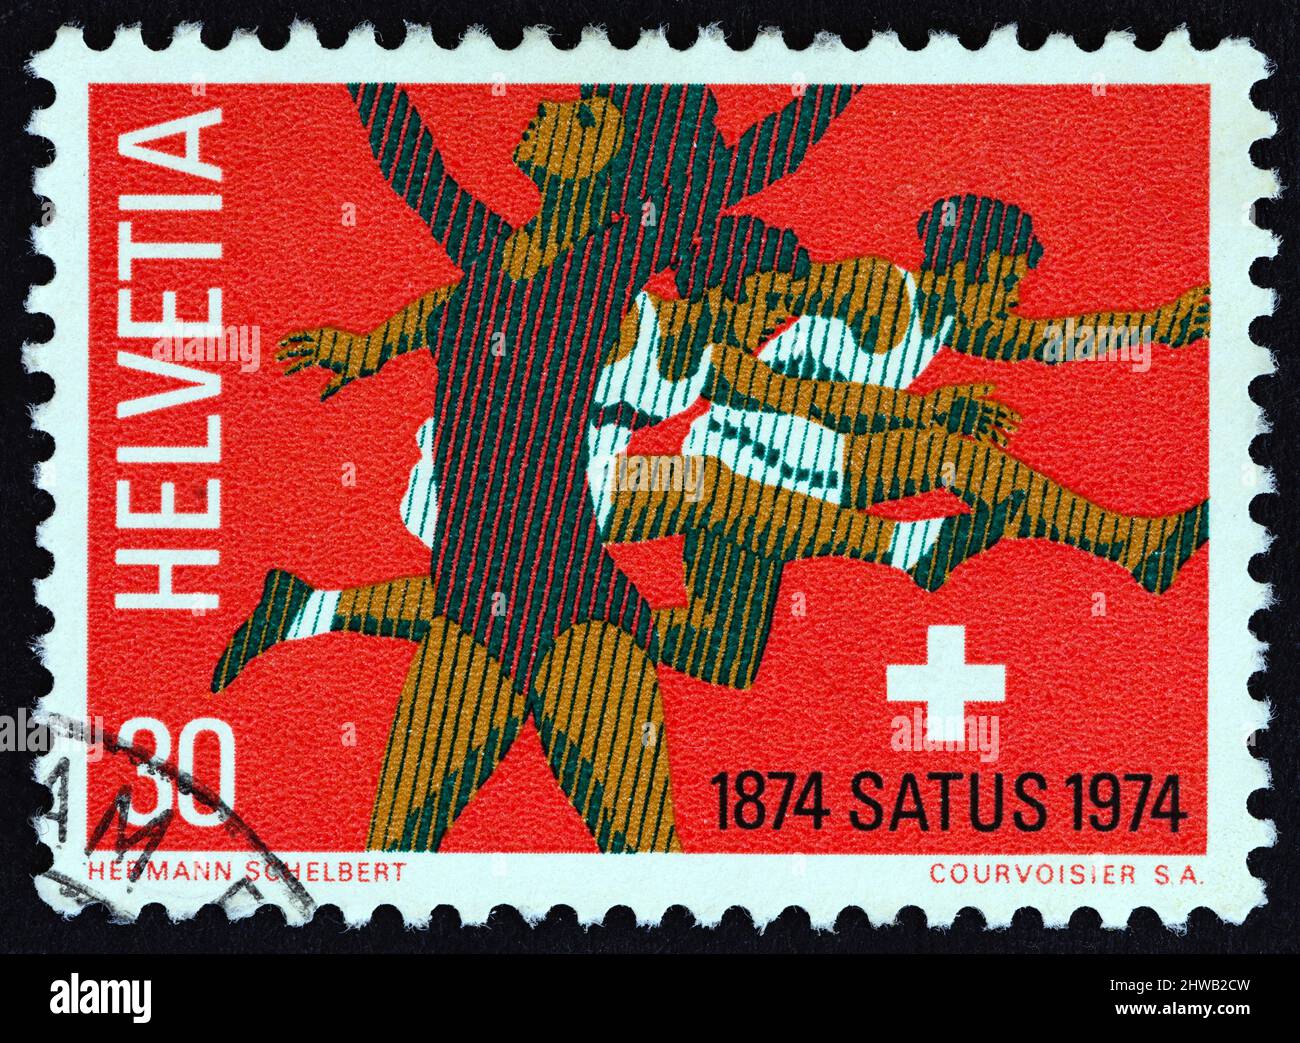 SWITZERLAND - CIRCA 1974: A stamp printed in Switzerland shows Gymnast and hurdlers, circa 1974. Stock Photo